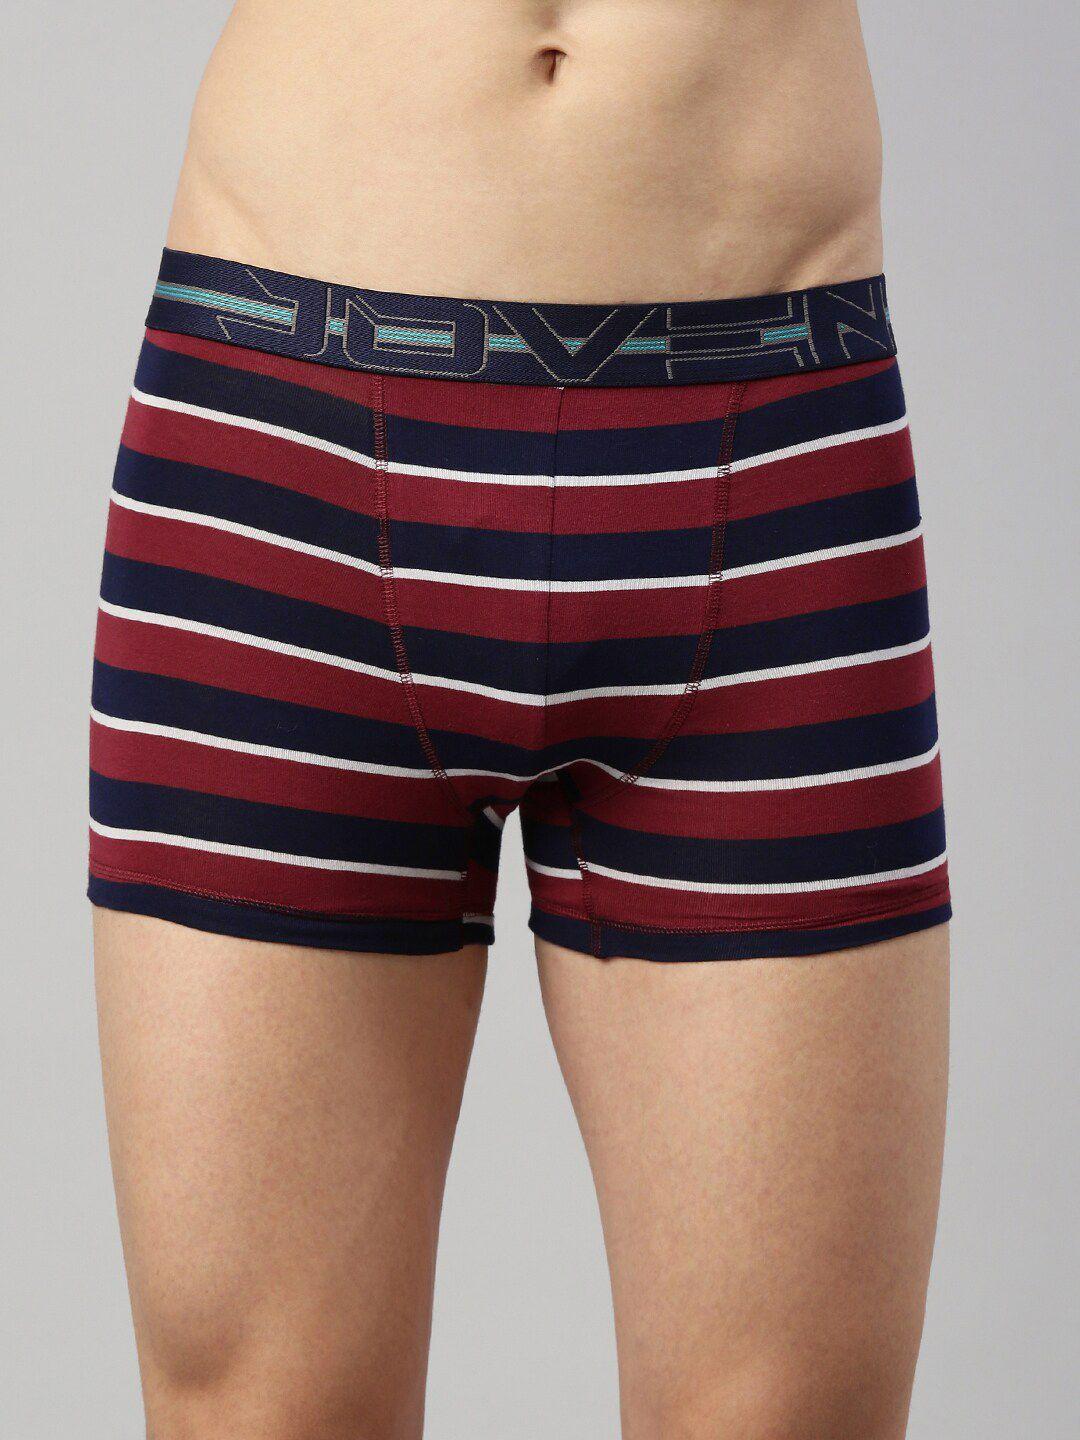 joven men red & navy blue striped cotton trunks tyd02